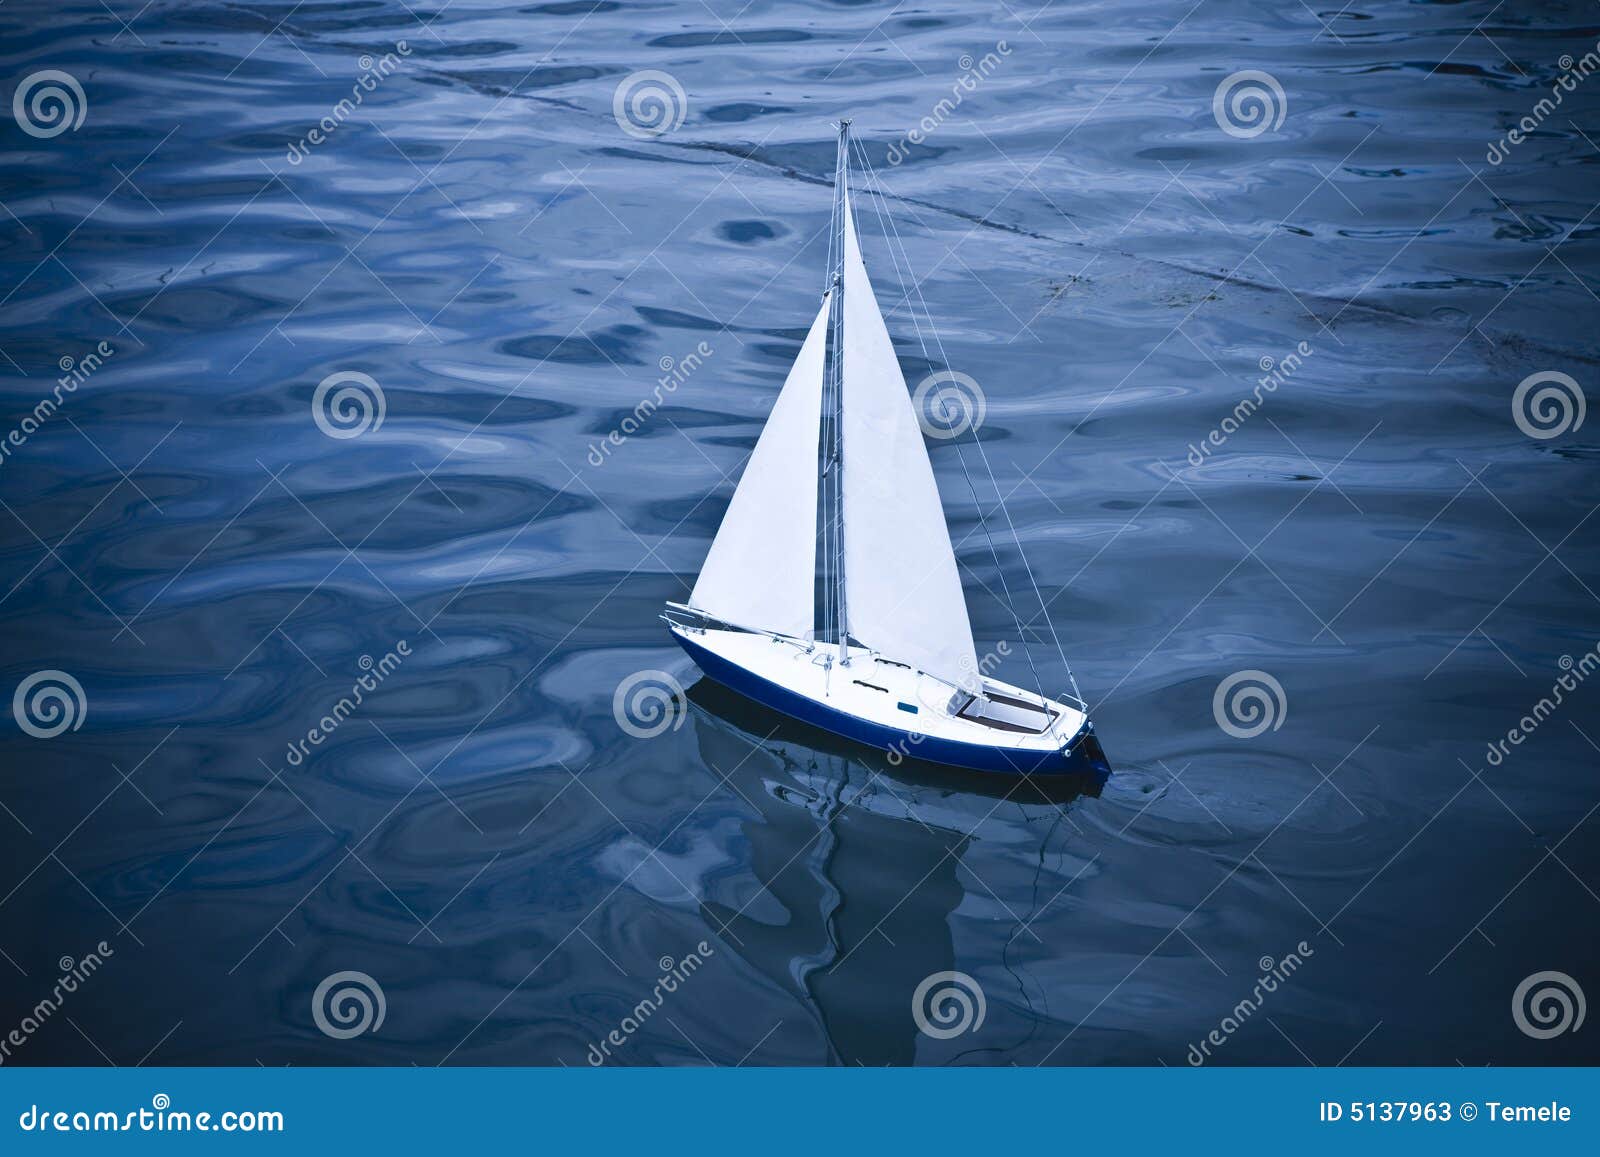 Small Model Of Sailboat Stock Photos - Image: 5137963